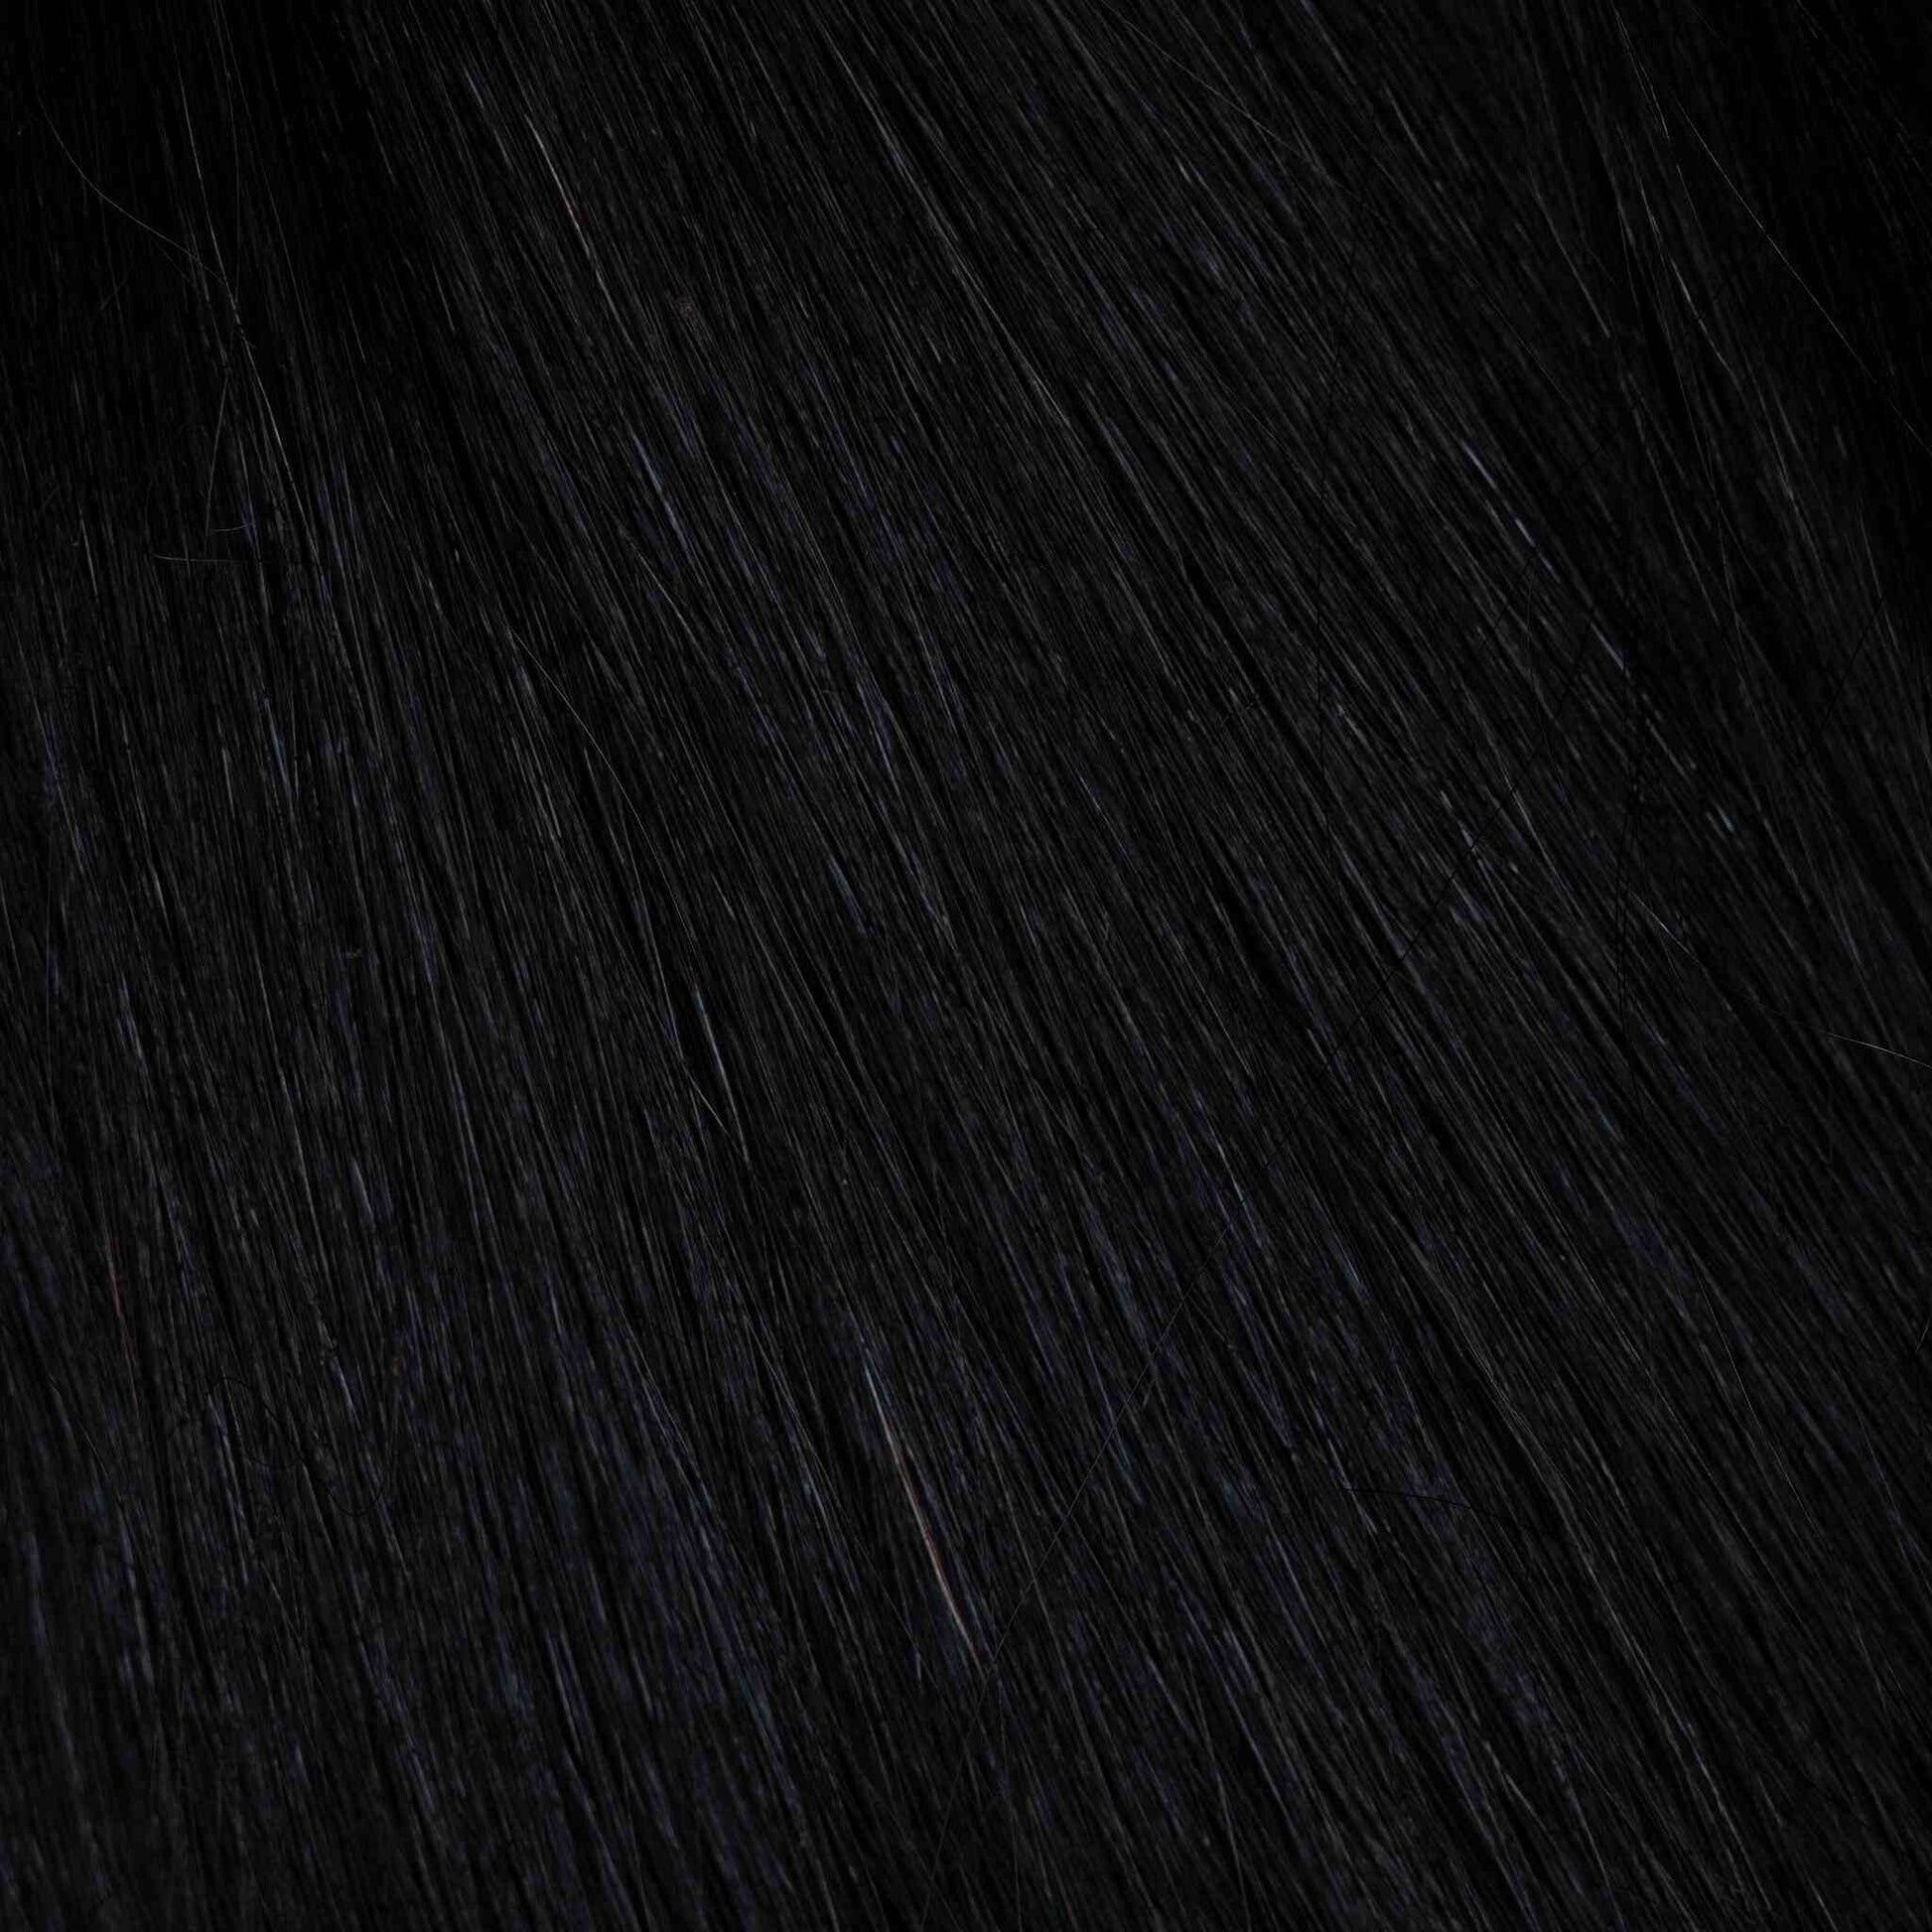 K-Tip 22" 25g Professional Hair Extensions - Jet Black #1